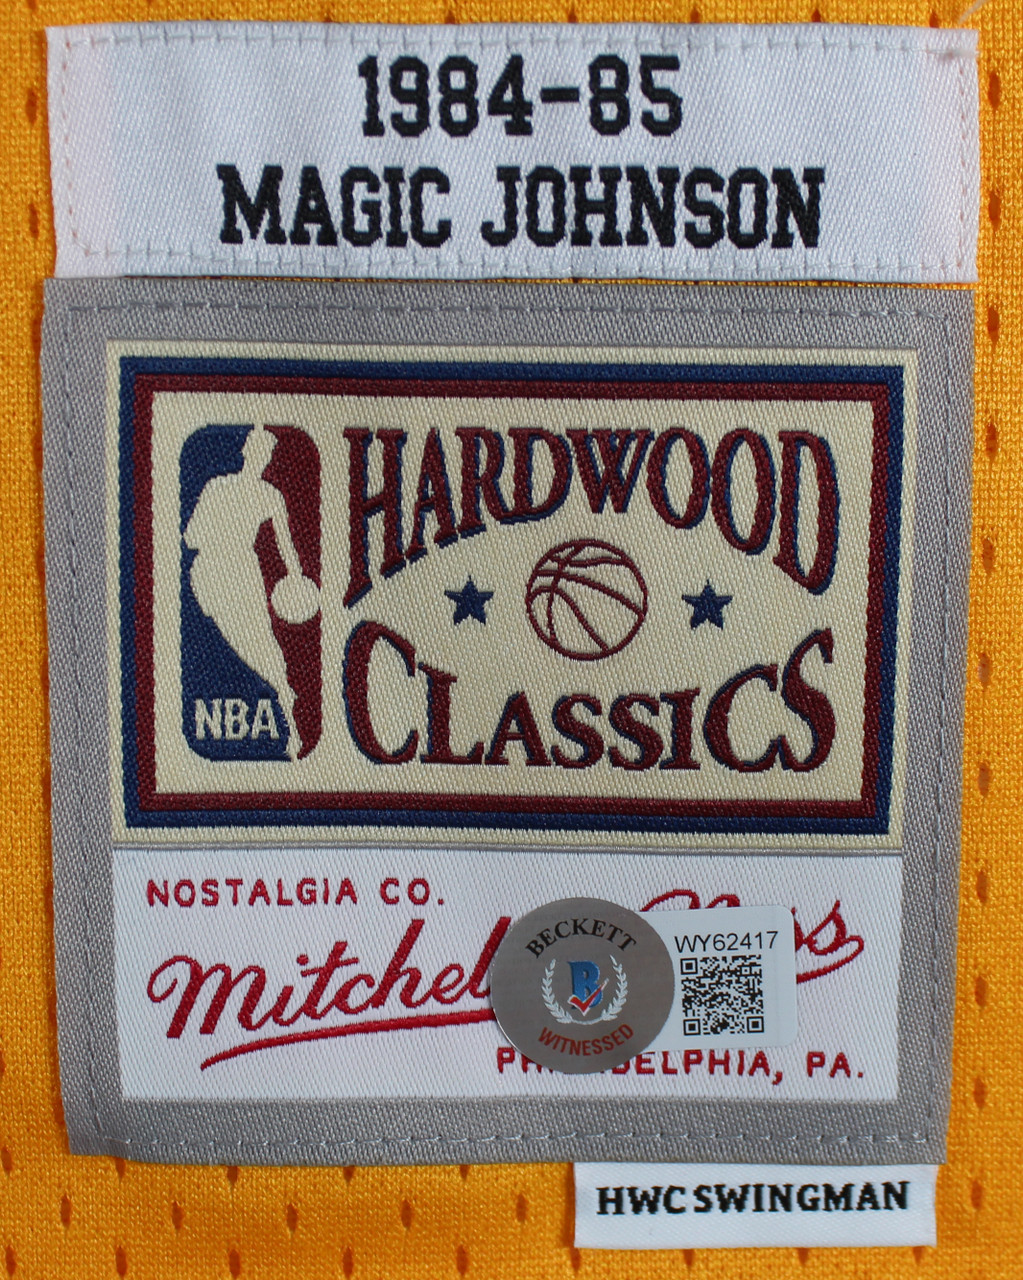 Magic Johnson 84-85 Hardwood Classic Swingman NBA Jersey